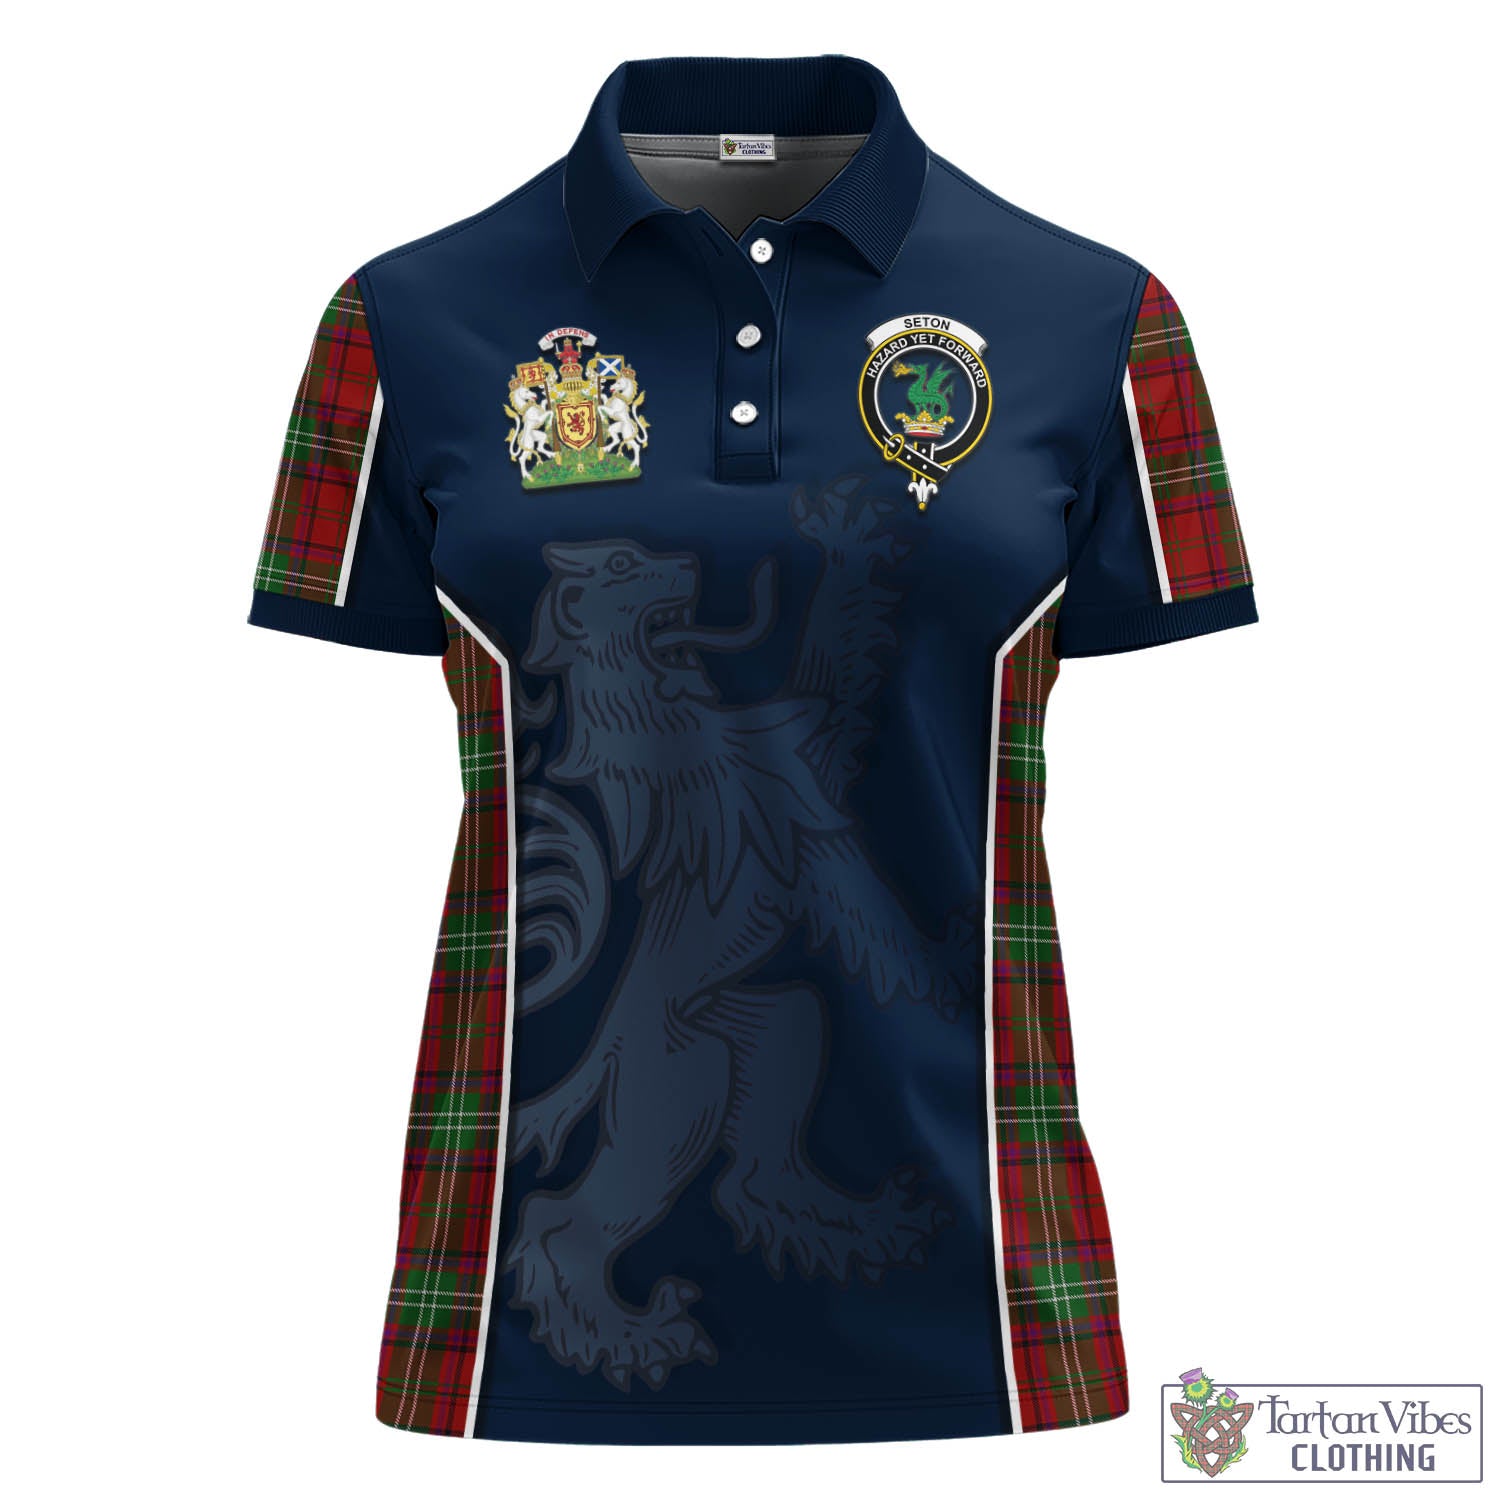 Tartan Vibes Clothing Seton Tartan Women's Polo Shirt with Family Crest and Lion Rampant Vibes Sport Style